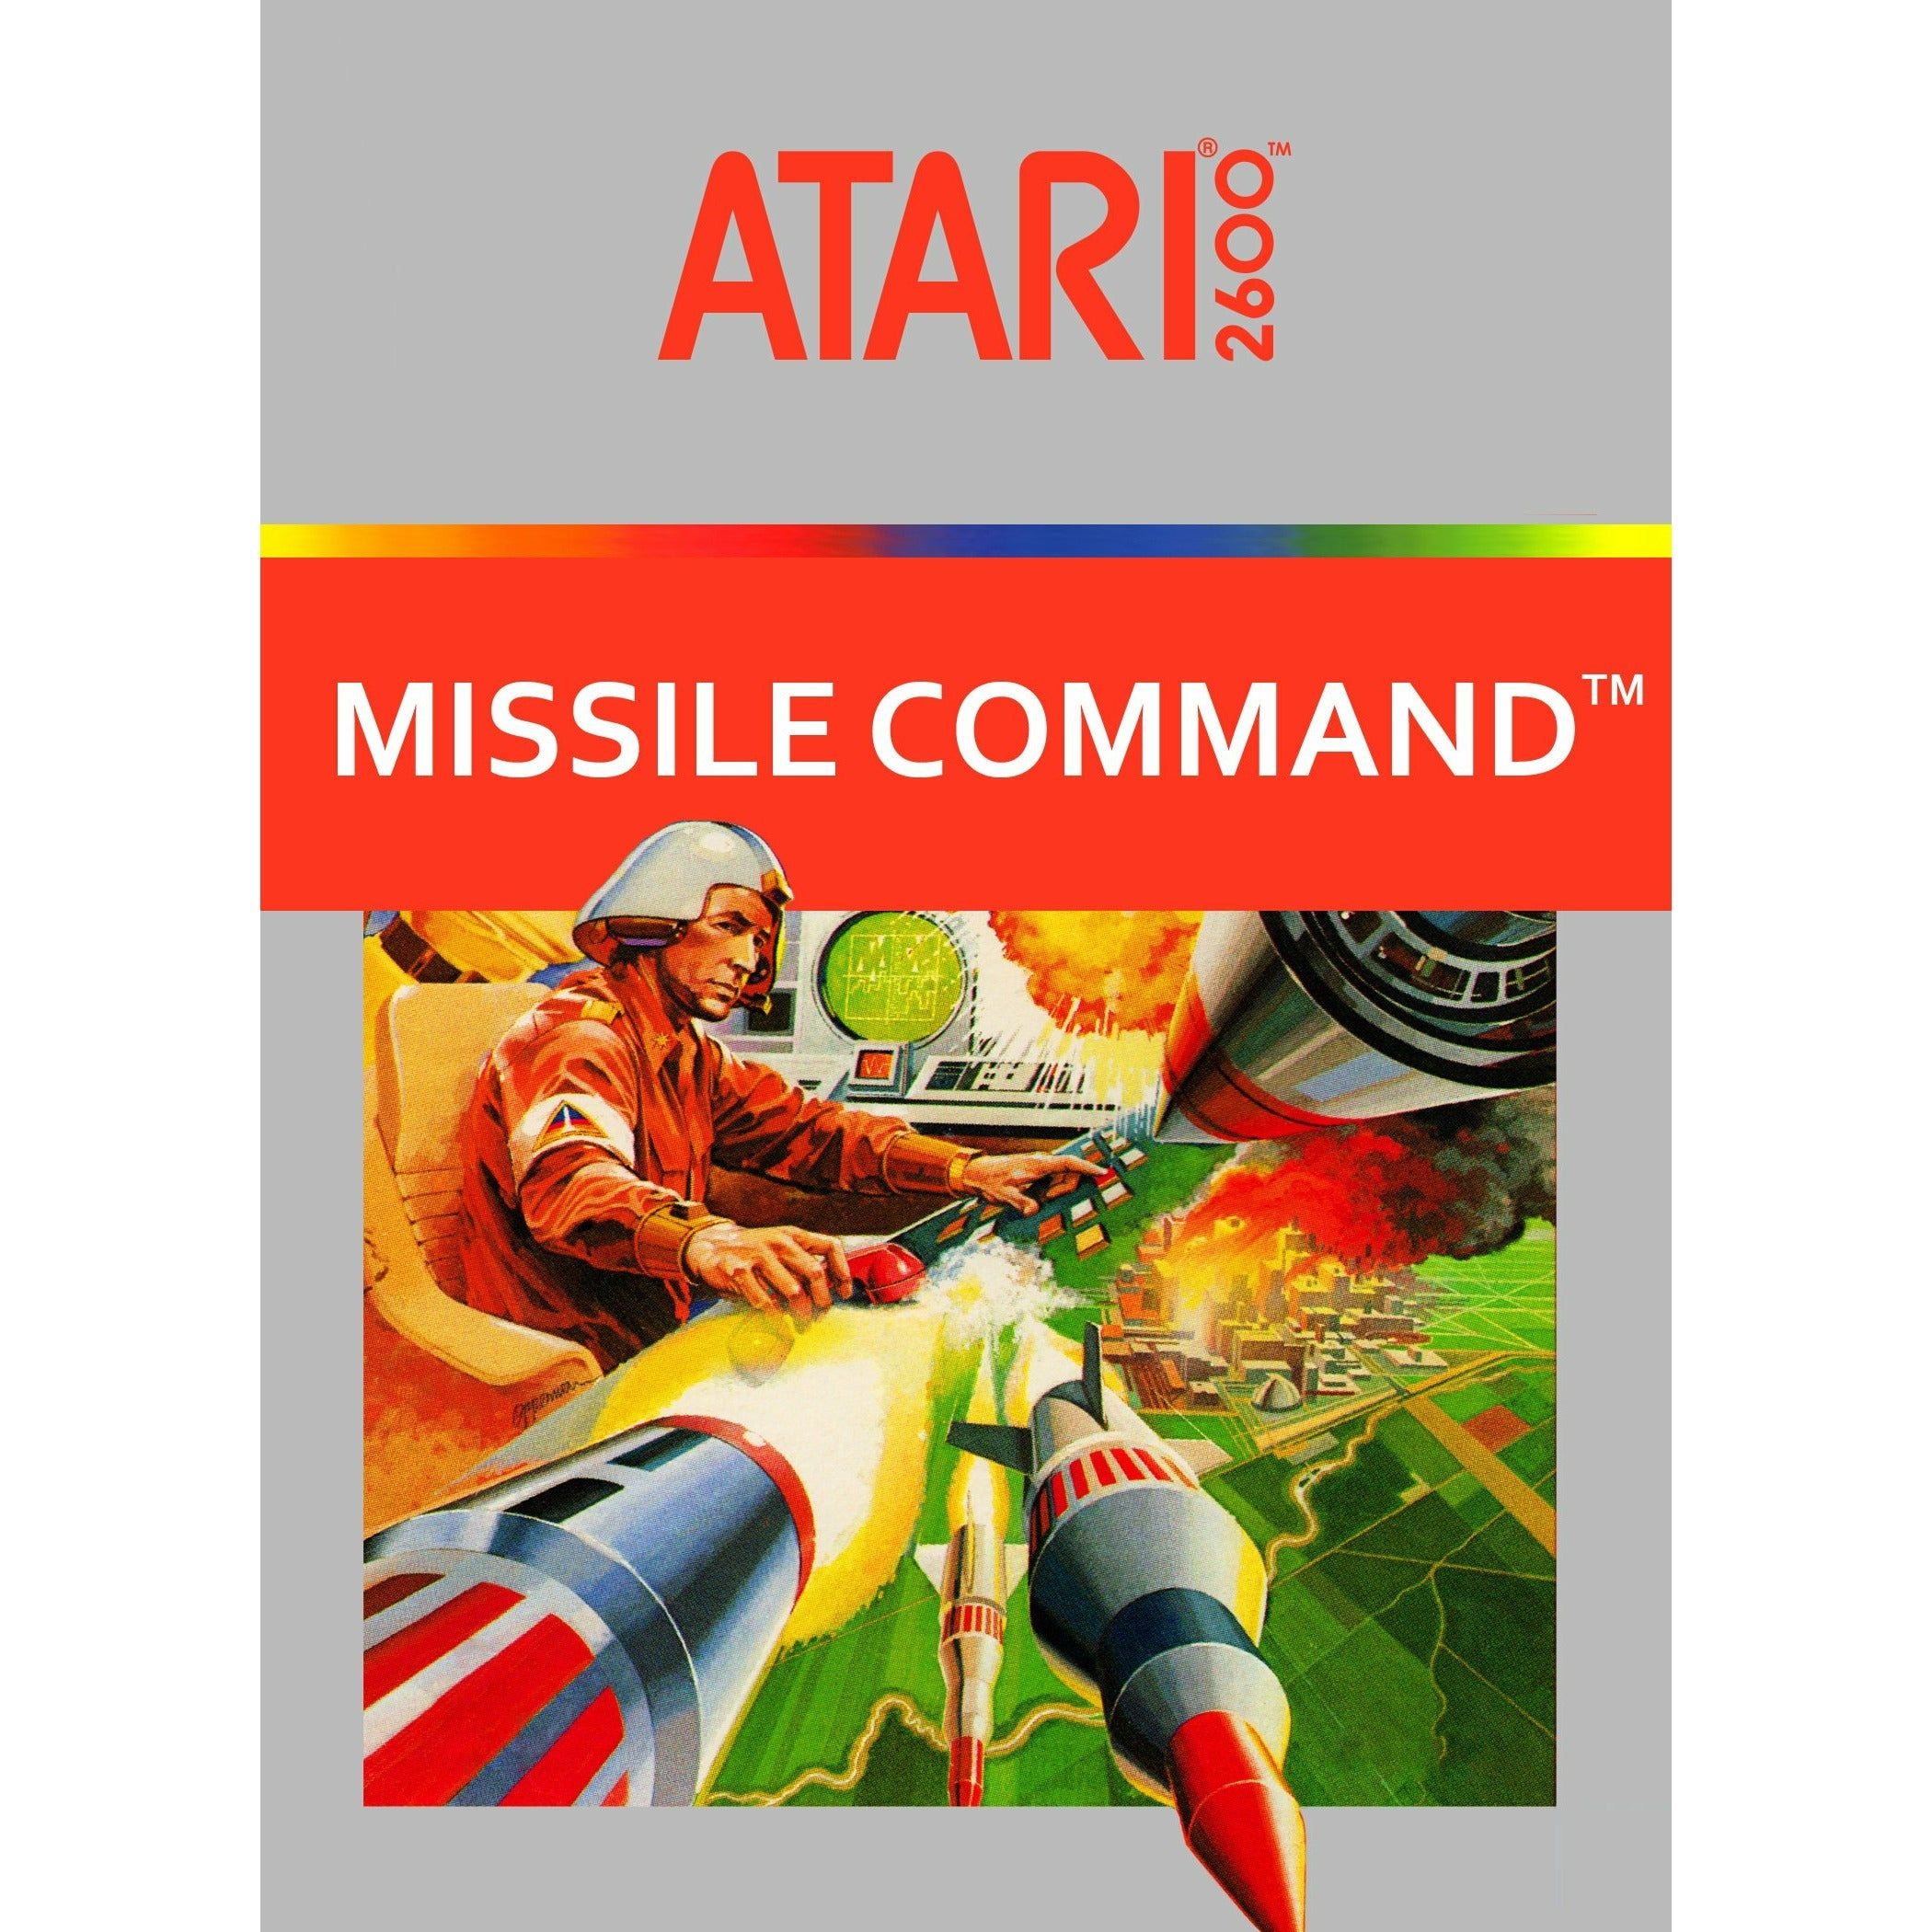 Atari 2600 - Commande de missile (cartouche uniquement)